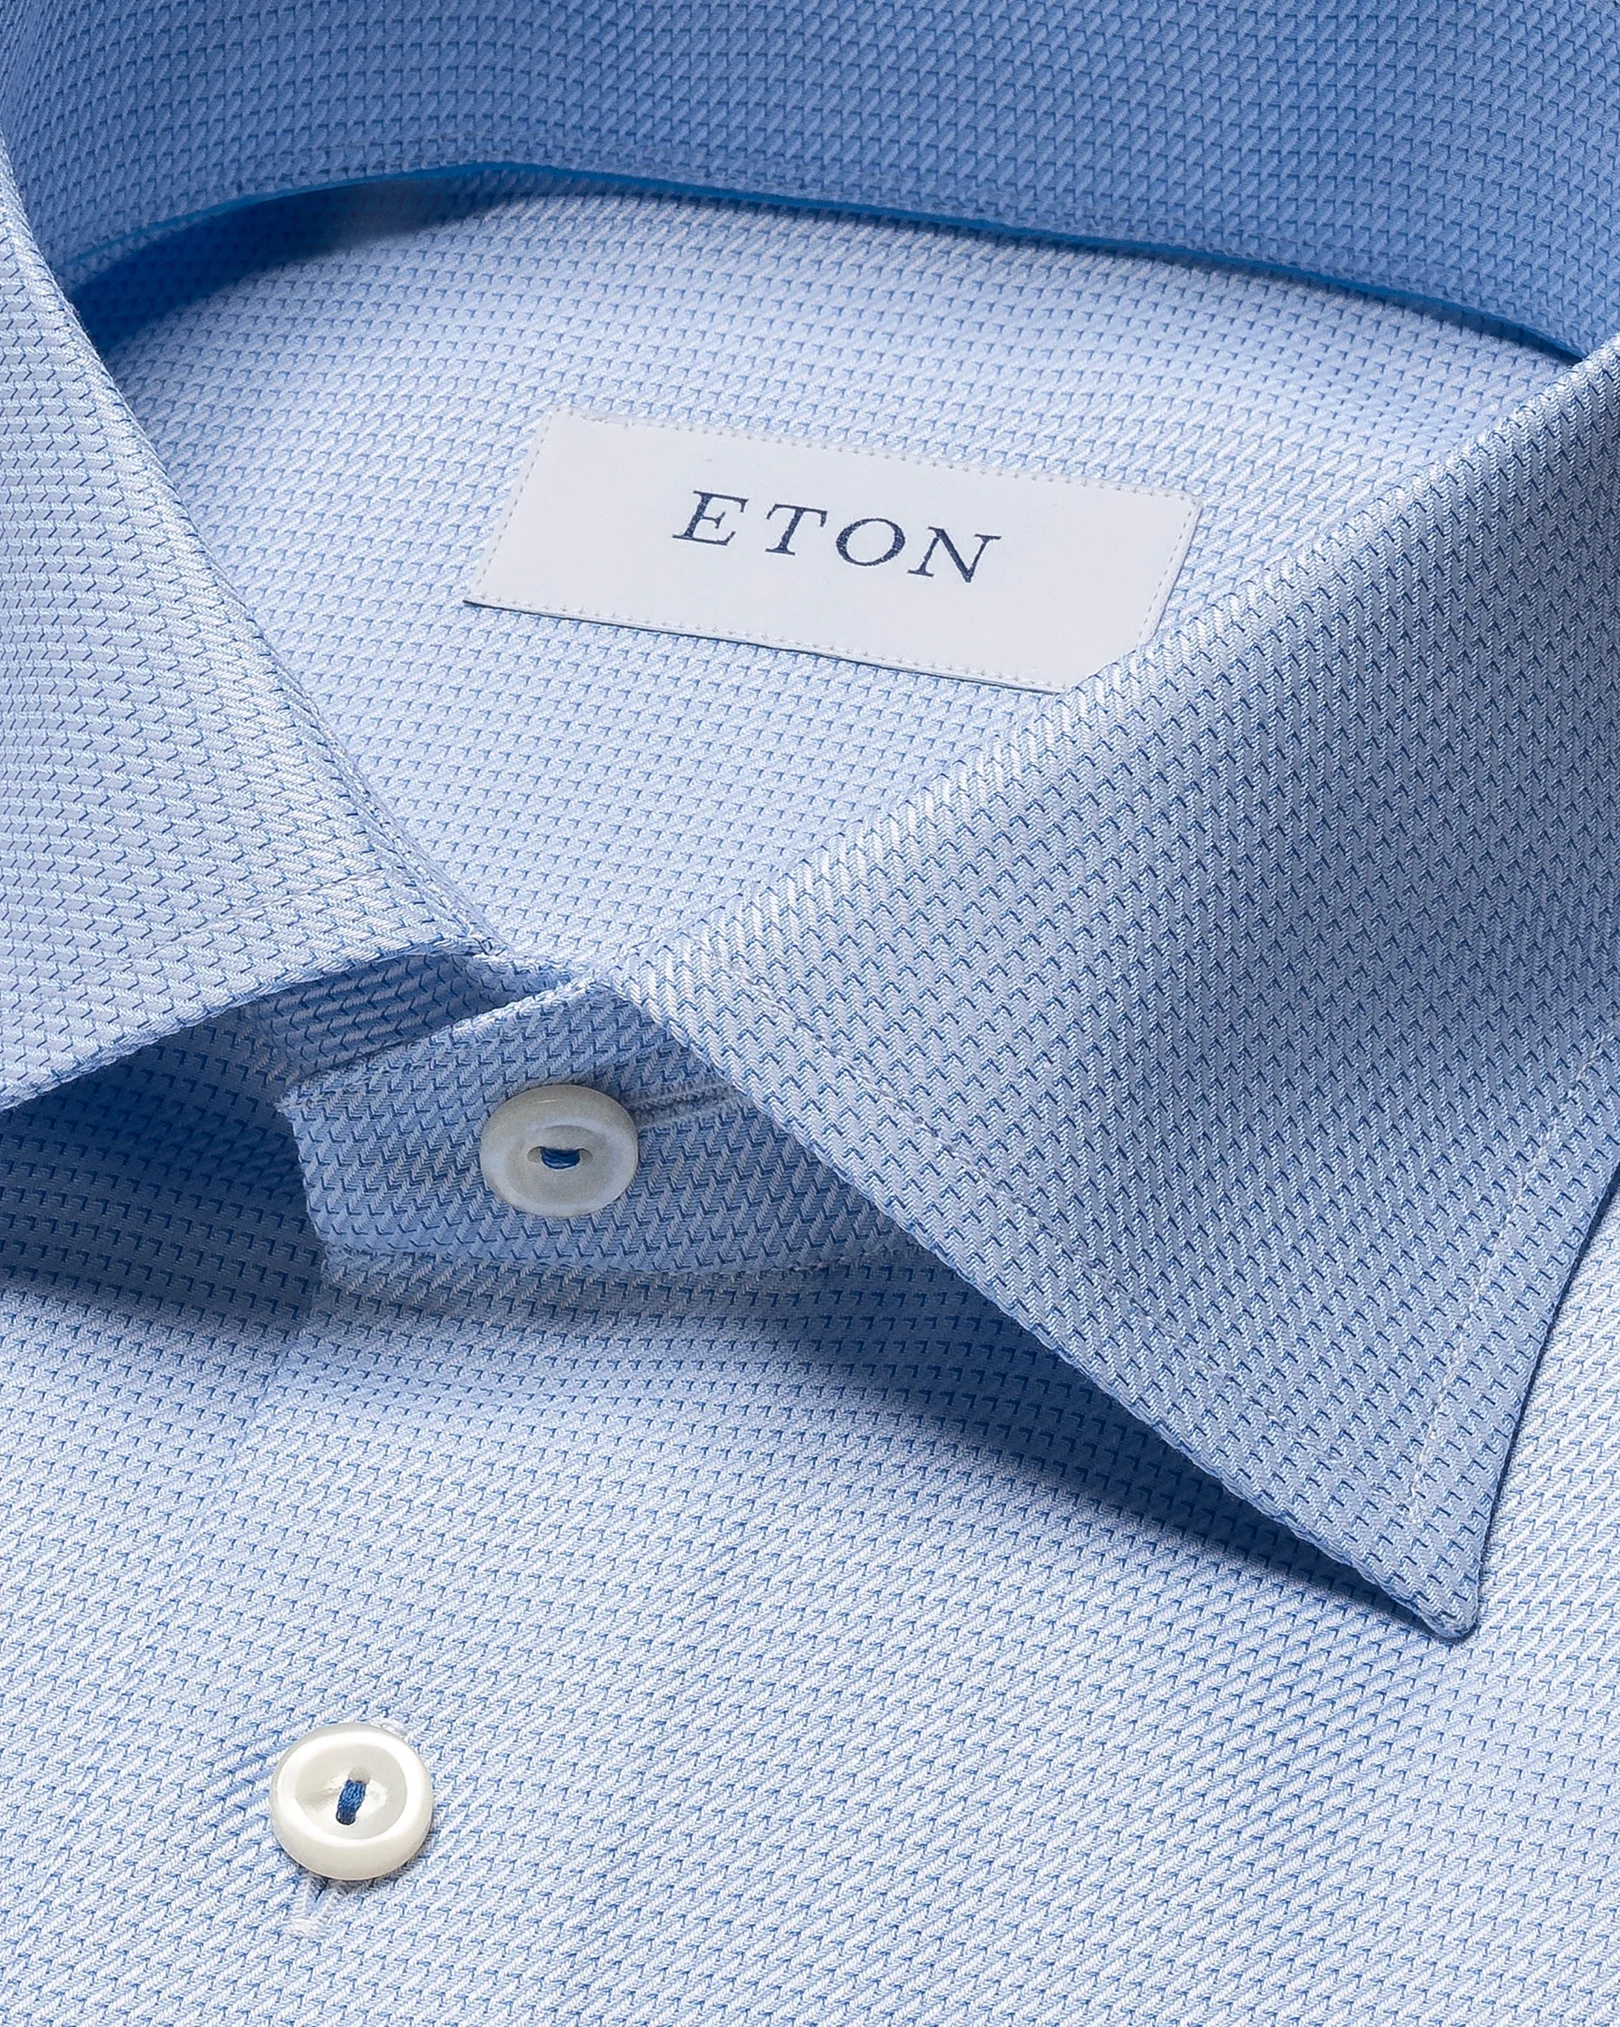 Eton - light blue cotton twill shirt